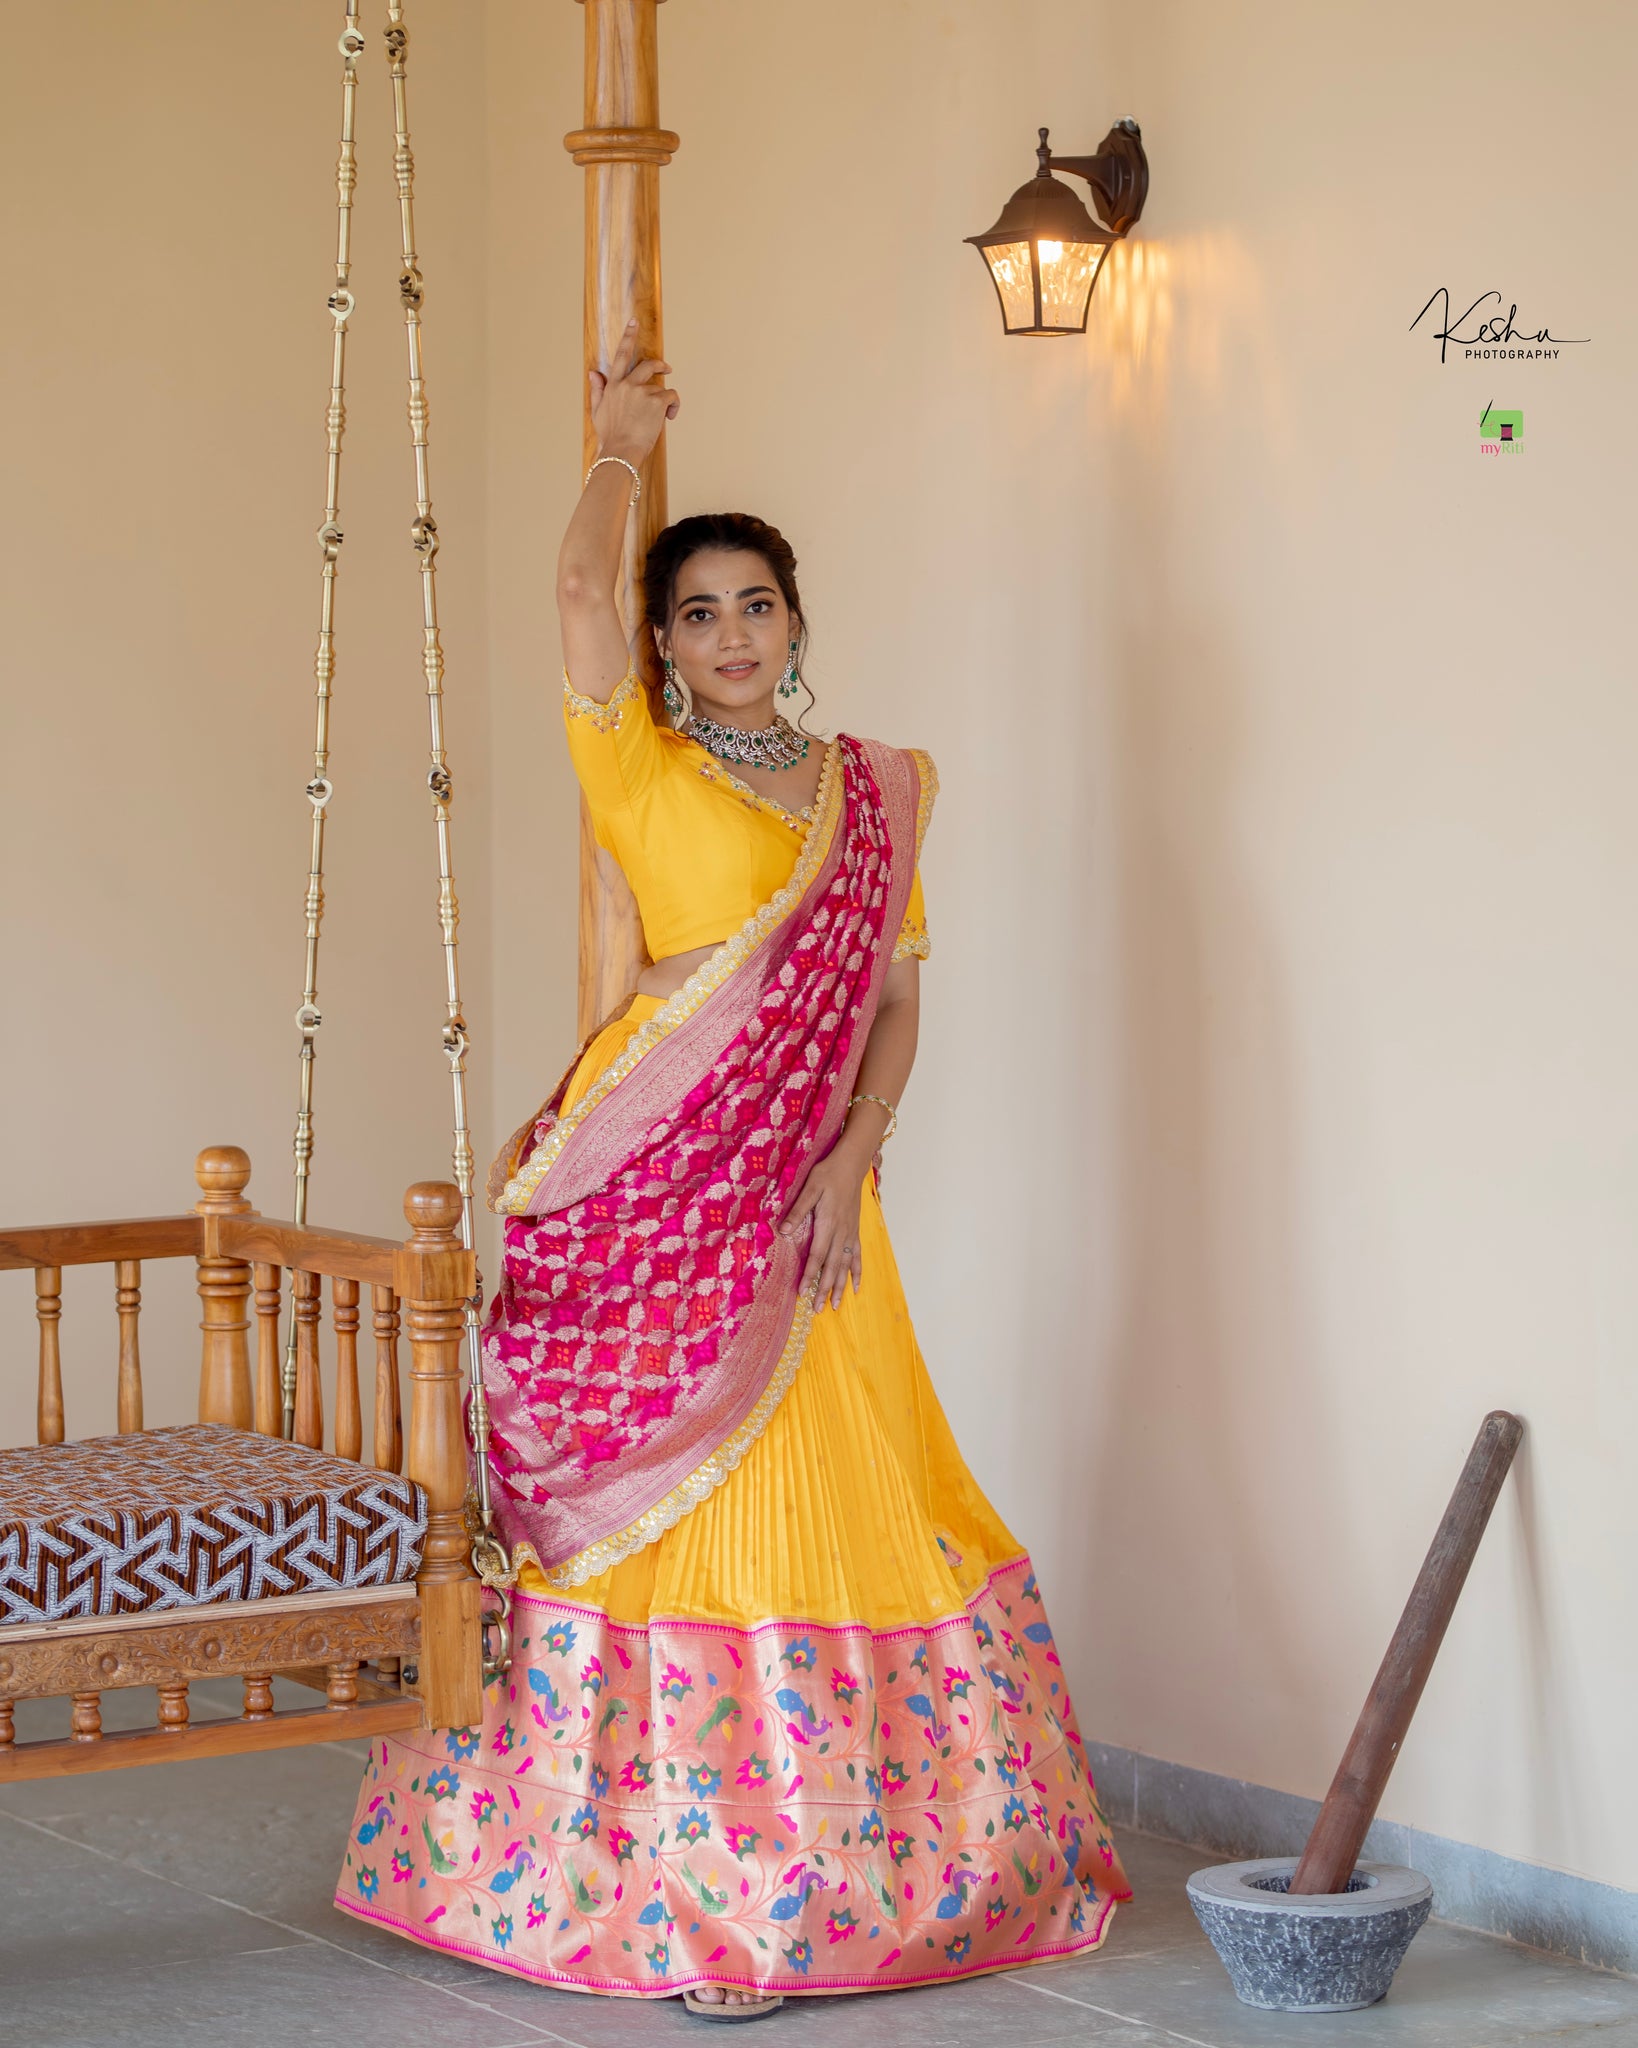 Bridal Paithani Banares half saree | Wedding Outfit